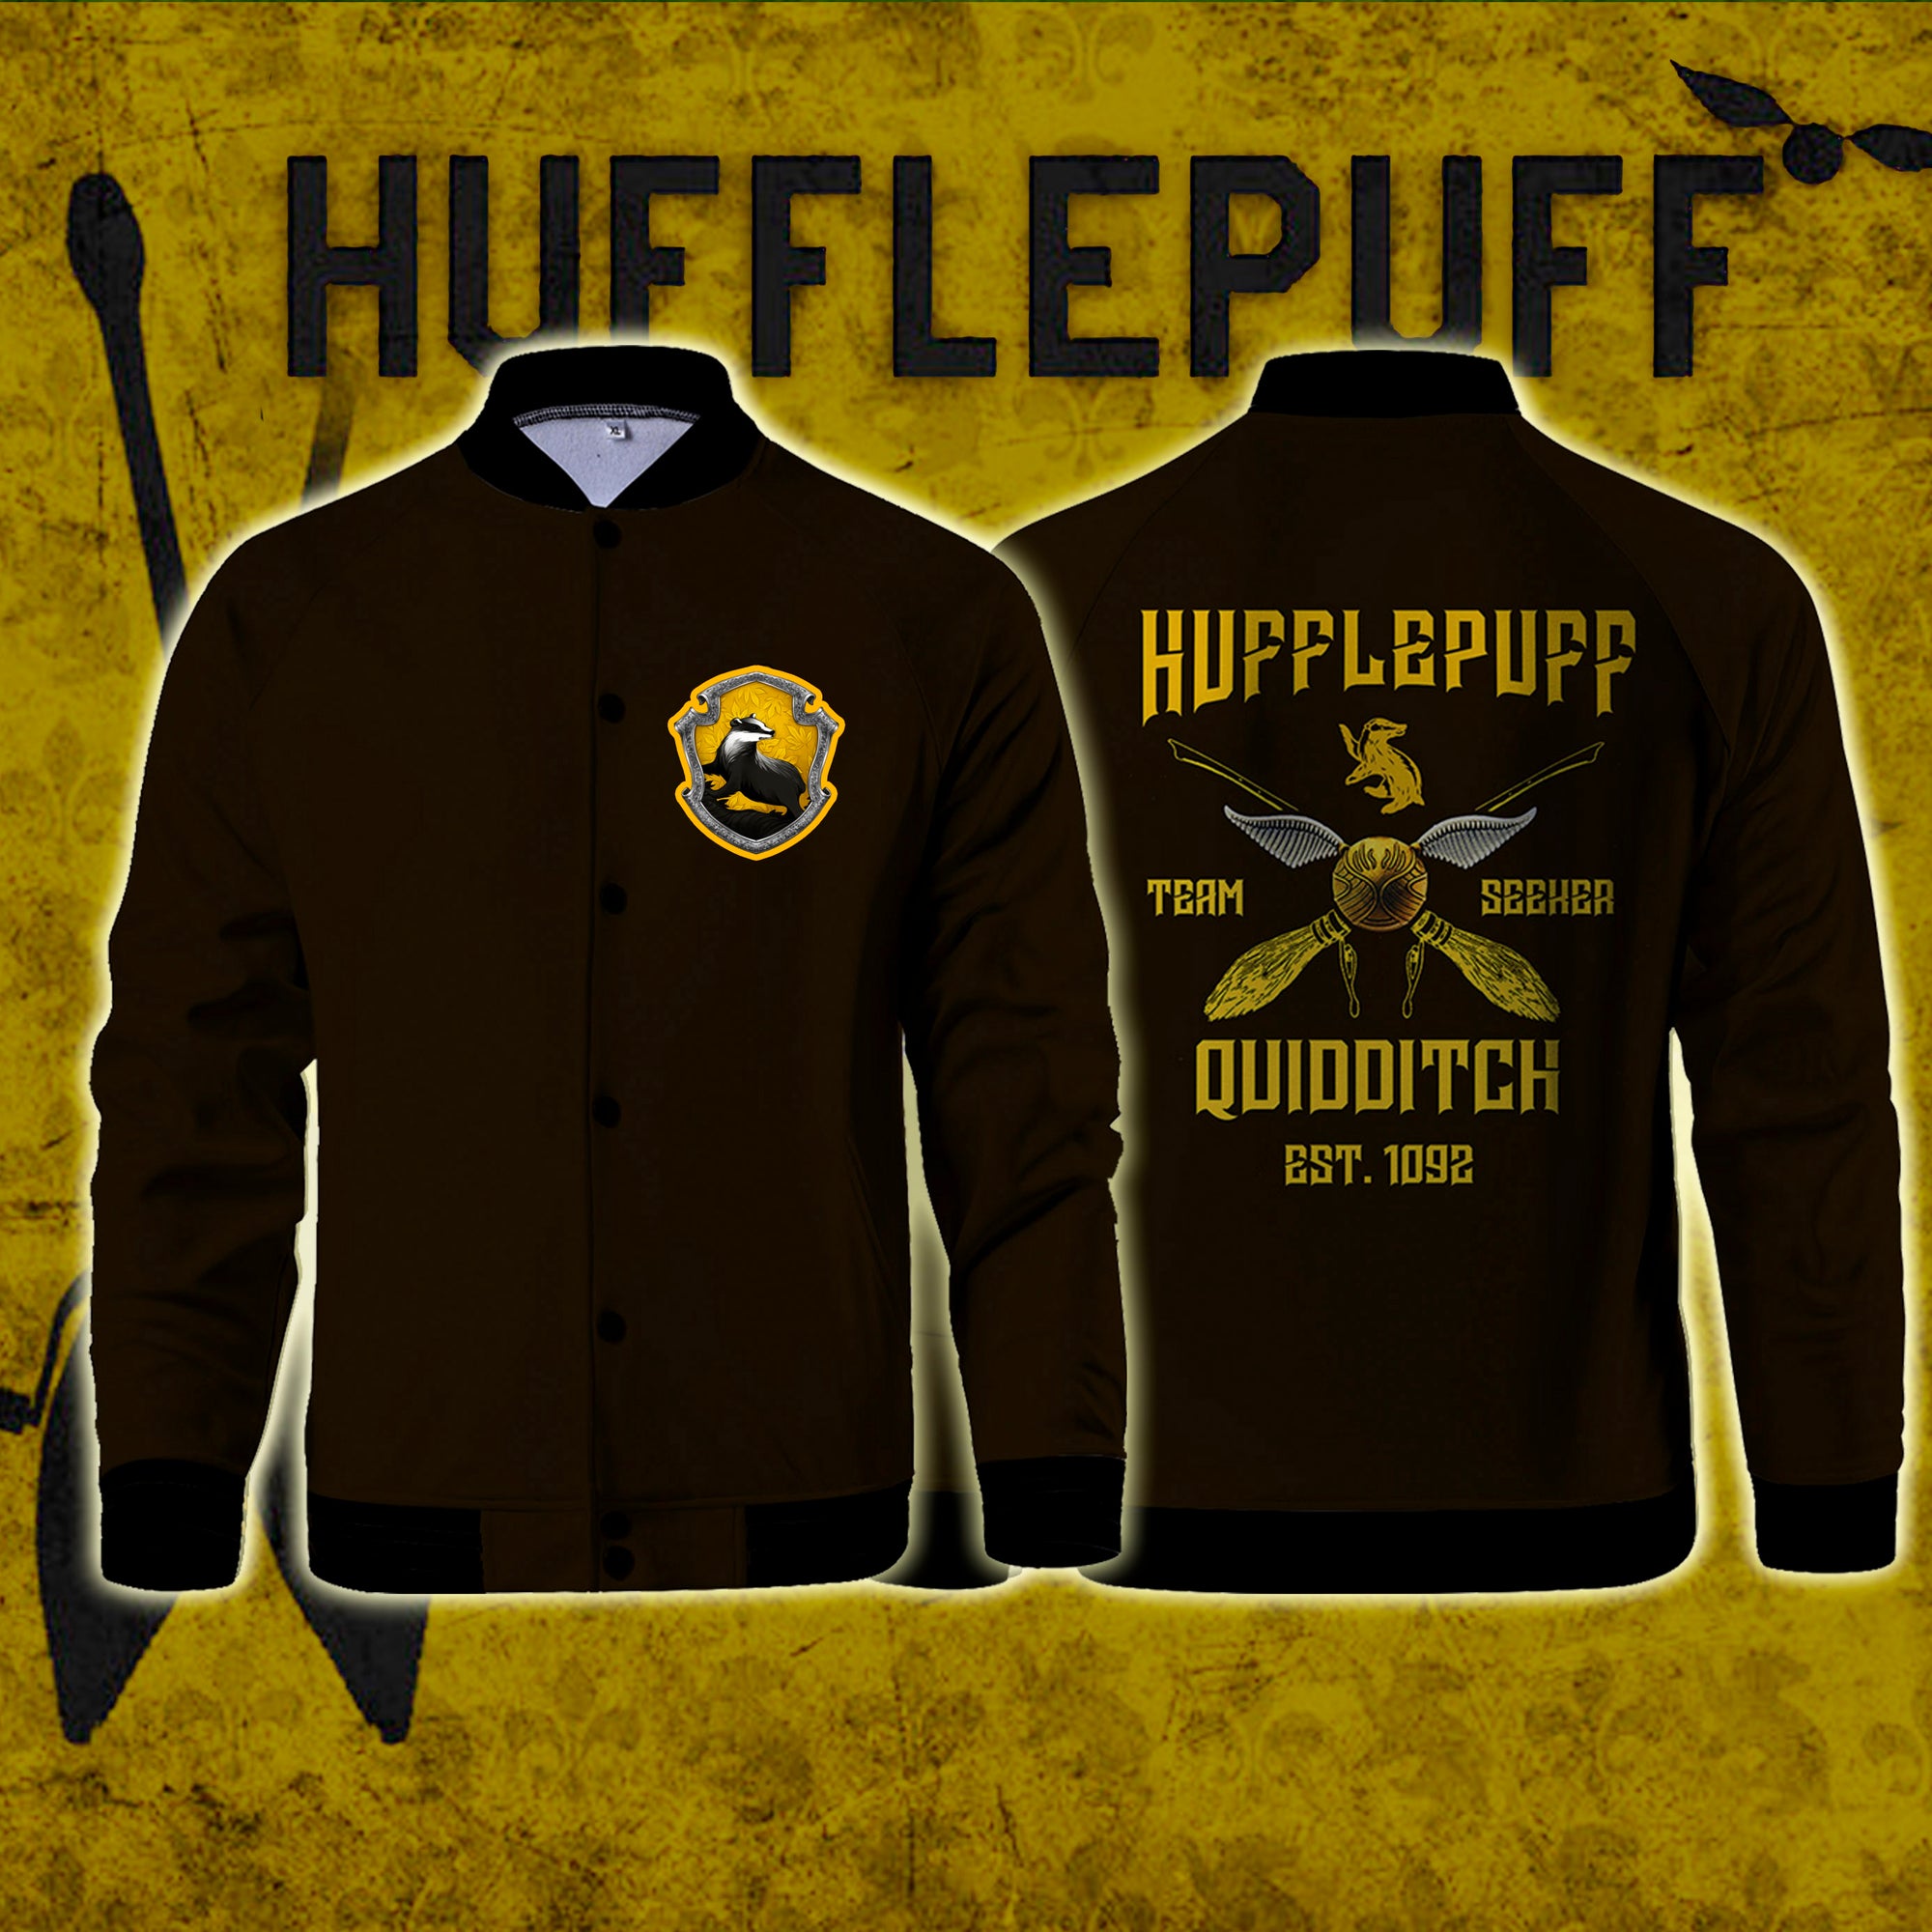 Hufflepuff Quidditch Team Est 1092 Harry Potter Baseball Jacket